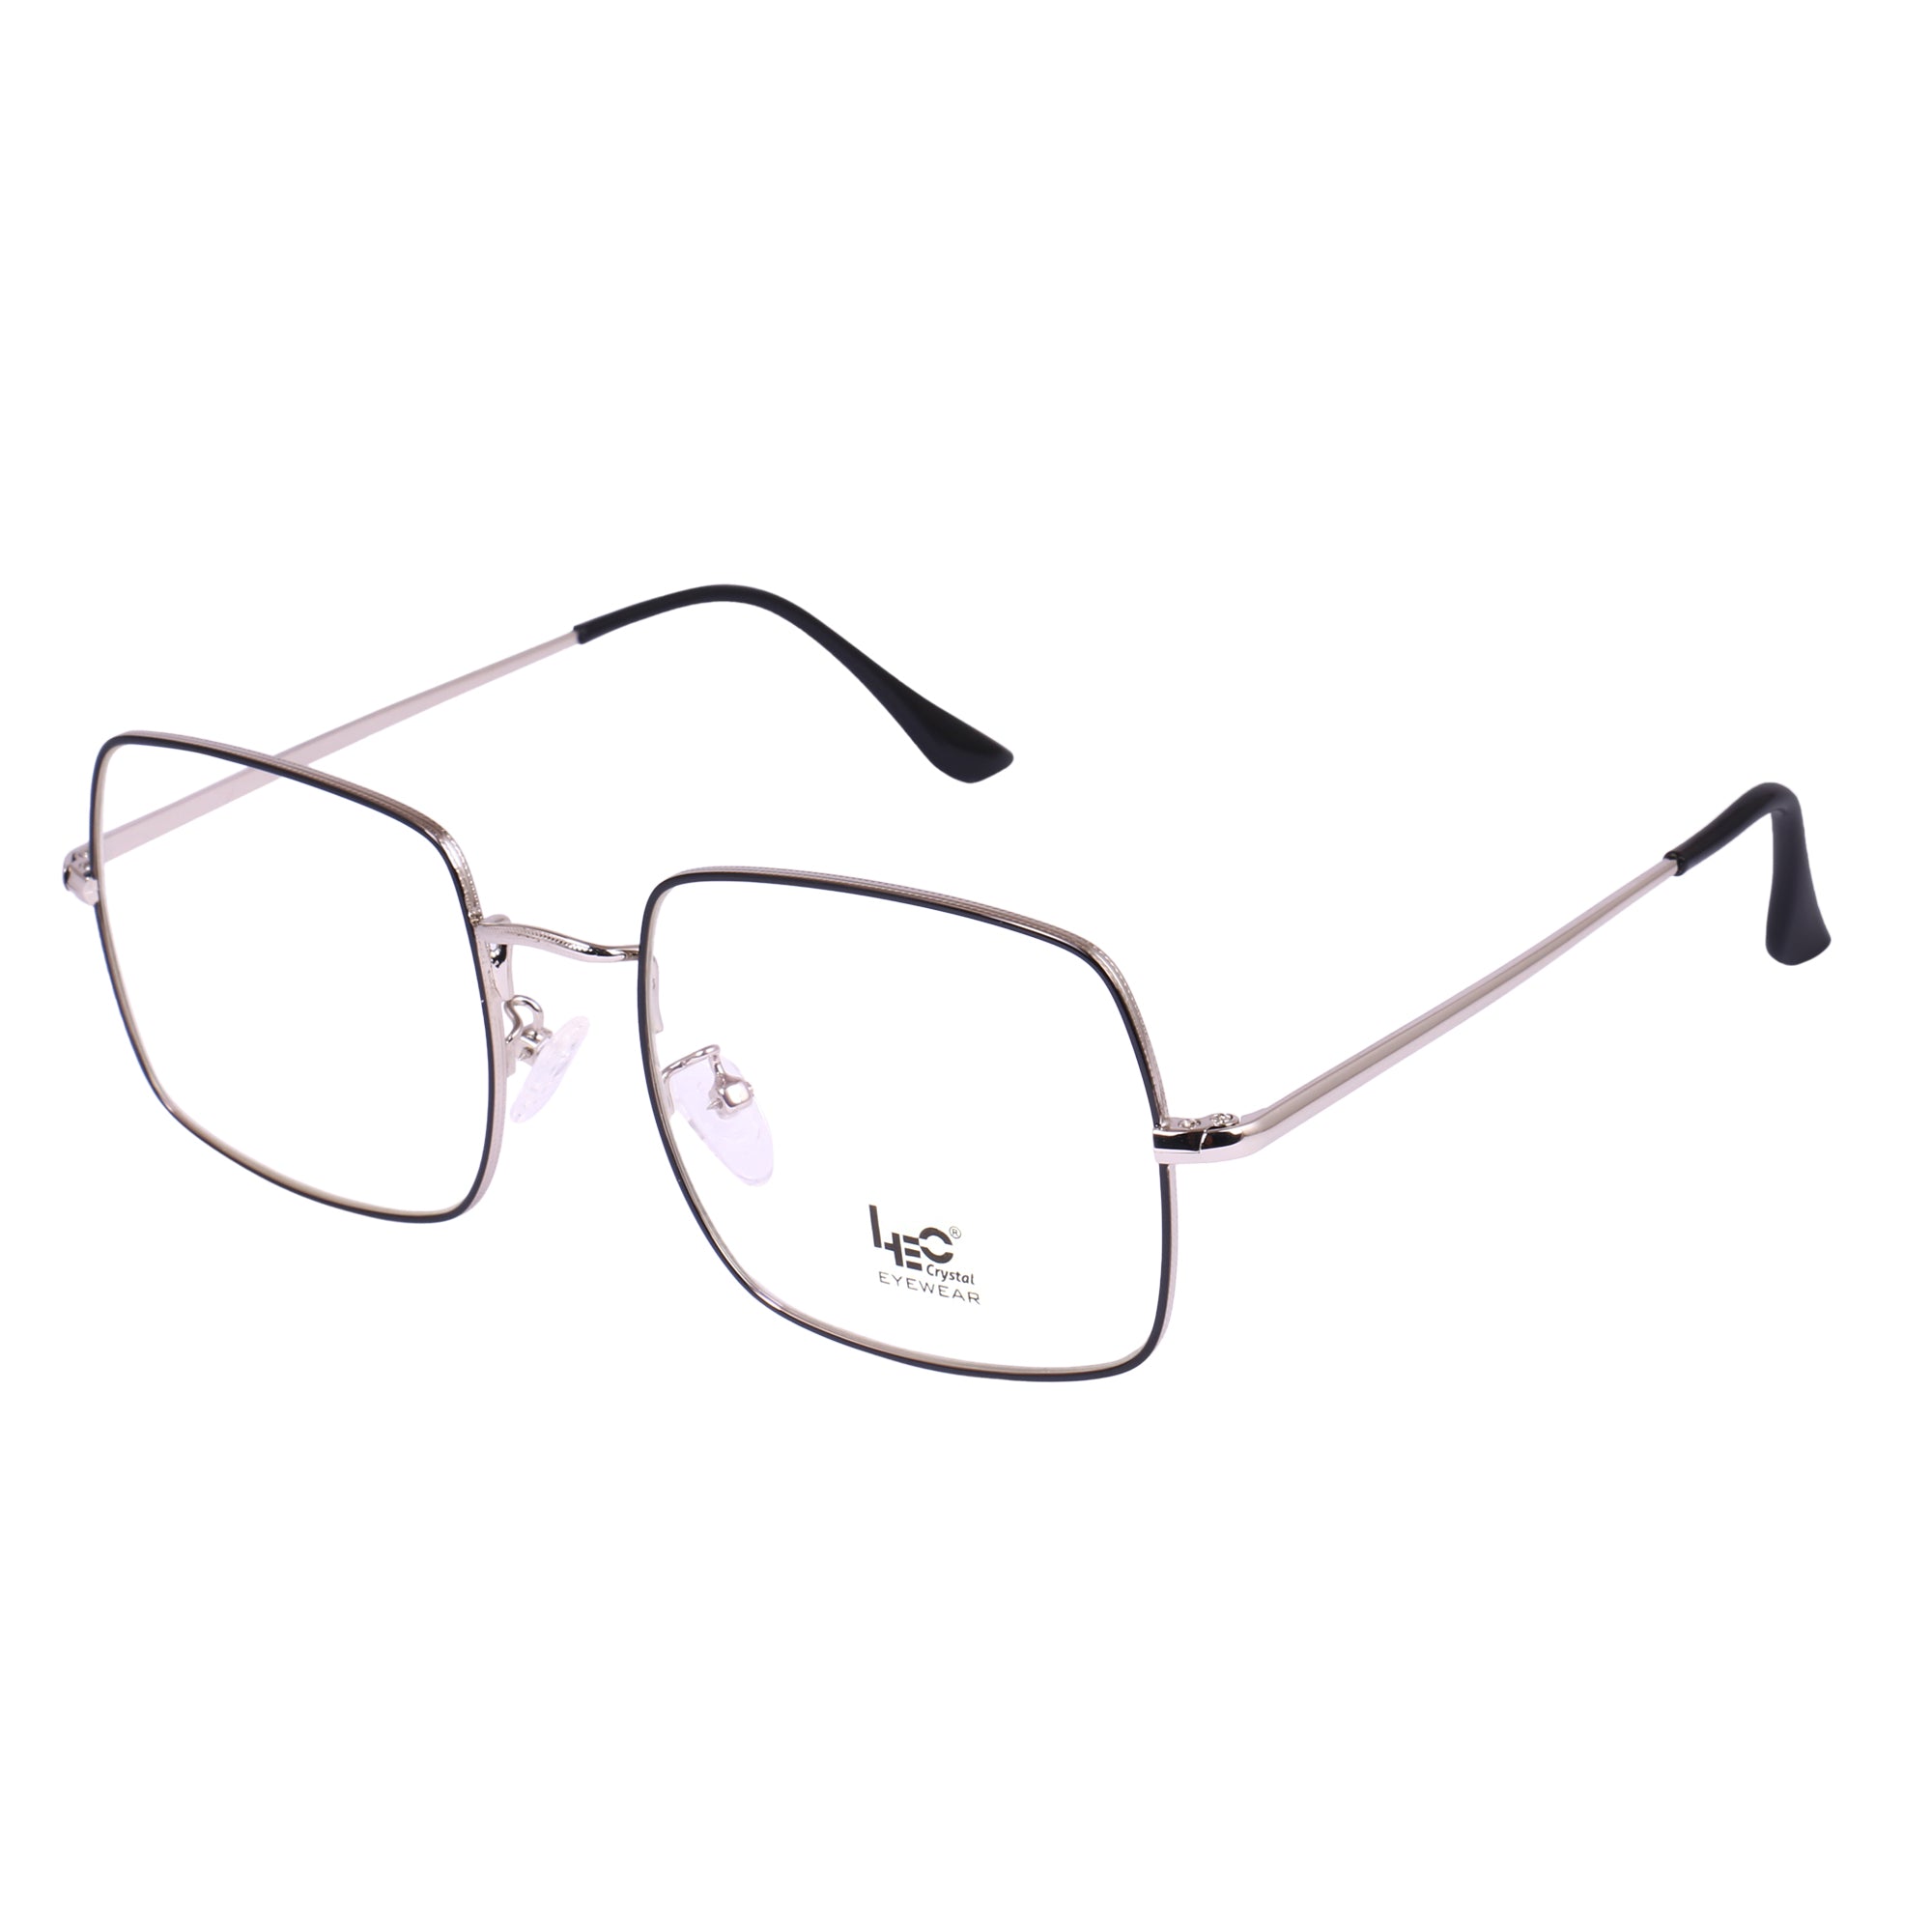 Silver Square Metal Eyeglasses - L3199